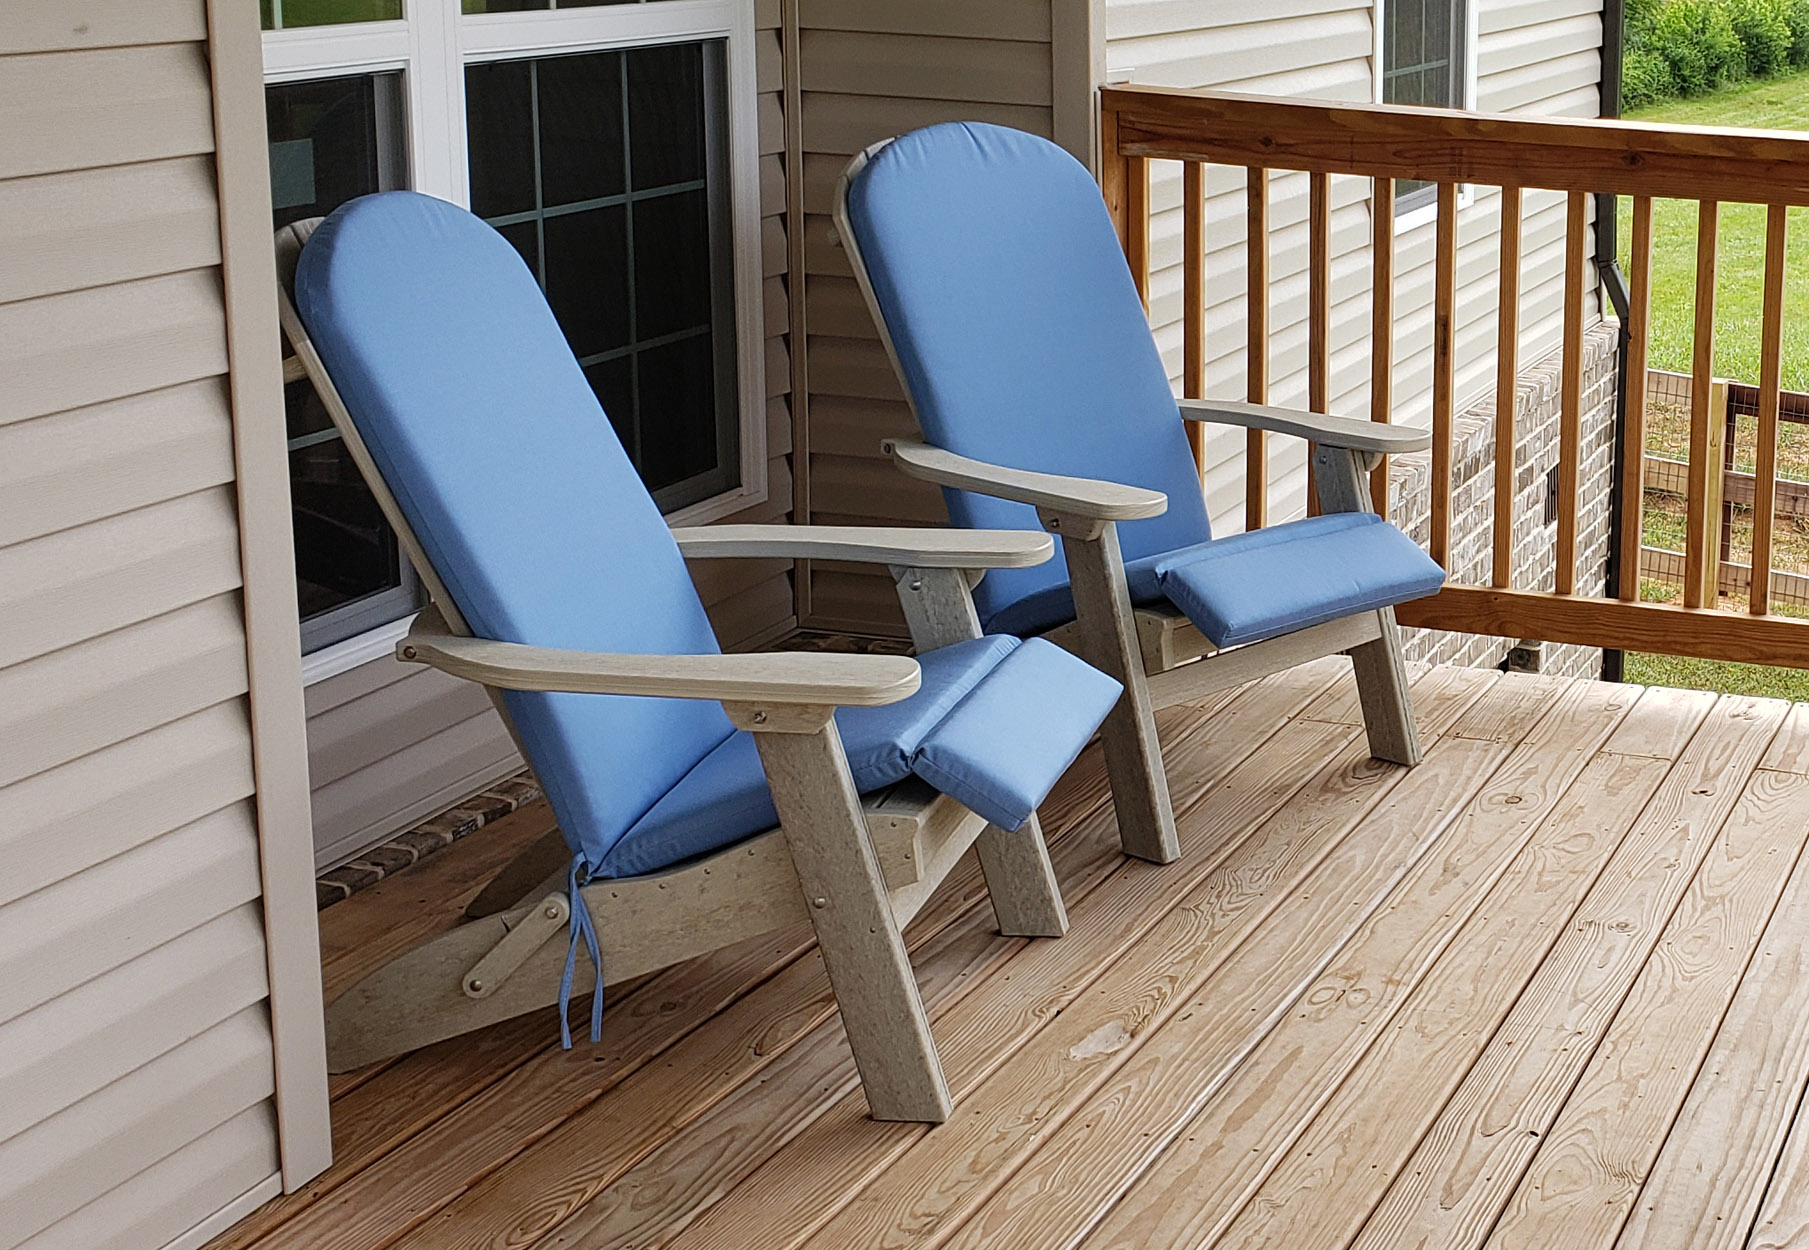 Adirondack Chair Cushion for Sea Aira Chairs, Category B Fabric